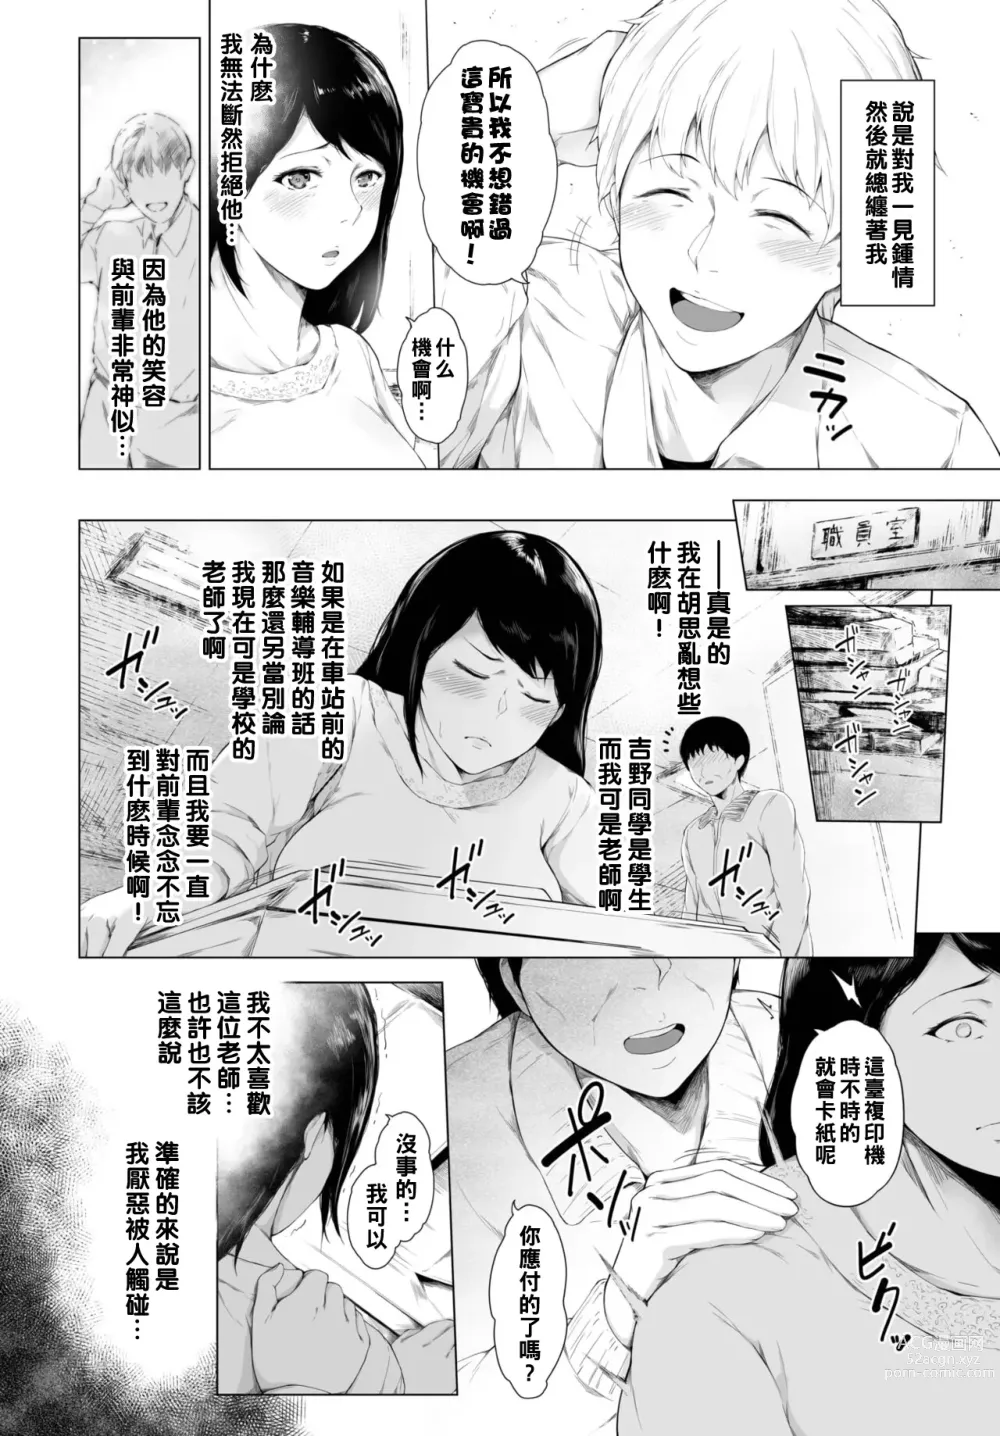 Page 2 of manga Jirashi Jirasare